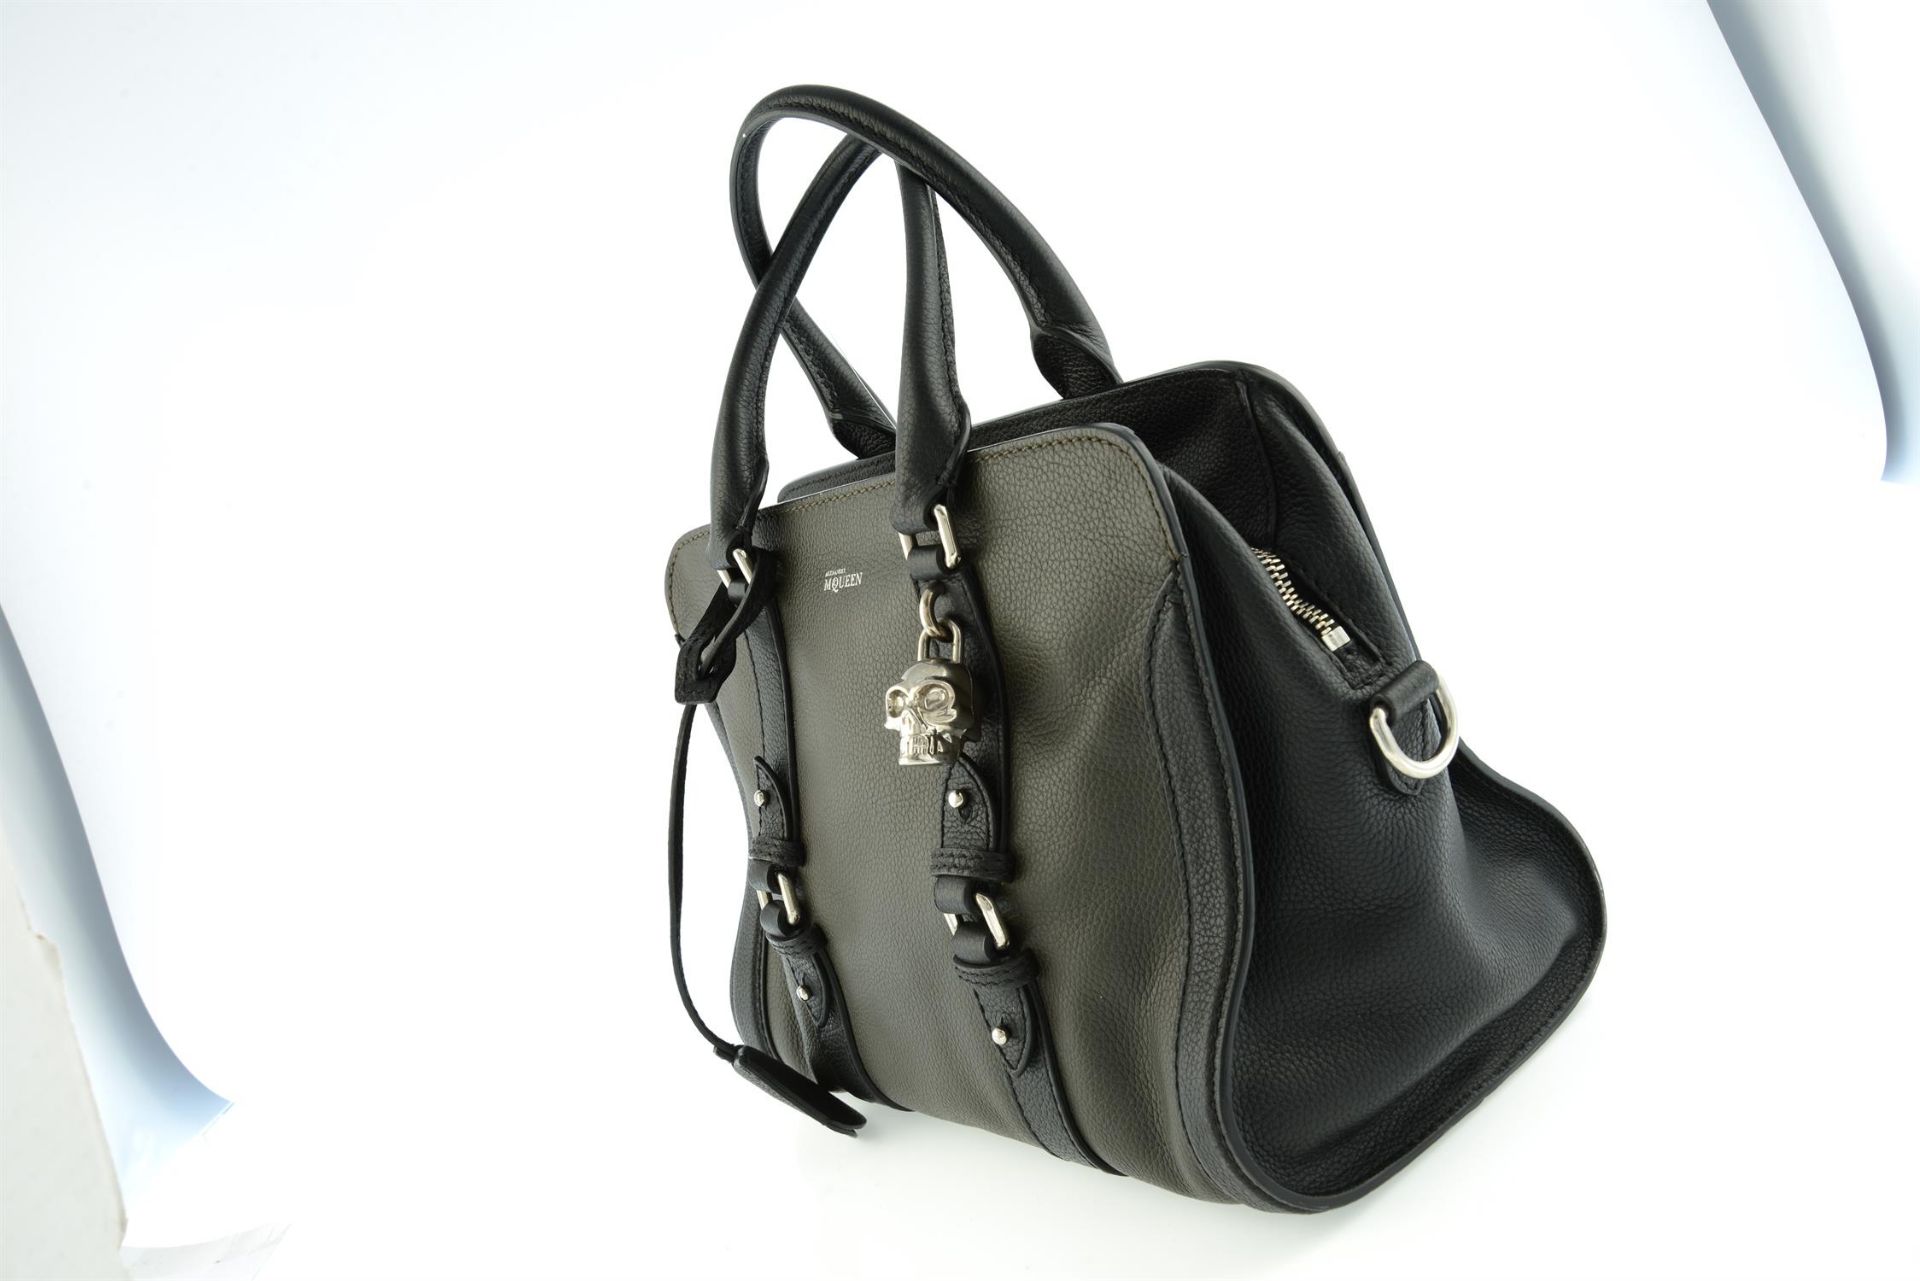 ALEXANDER MCQUEEN - a khaki and black leather handbag. - Image 3 of 6